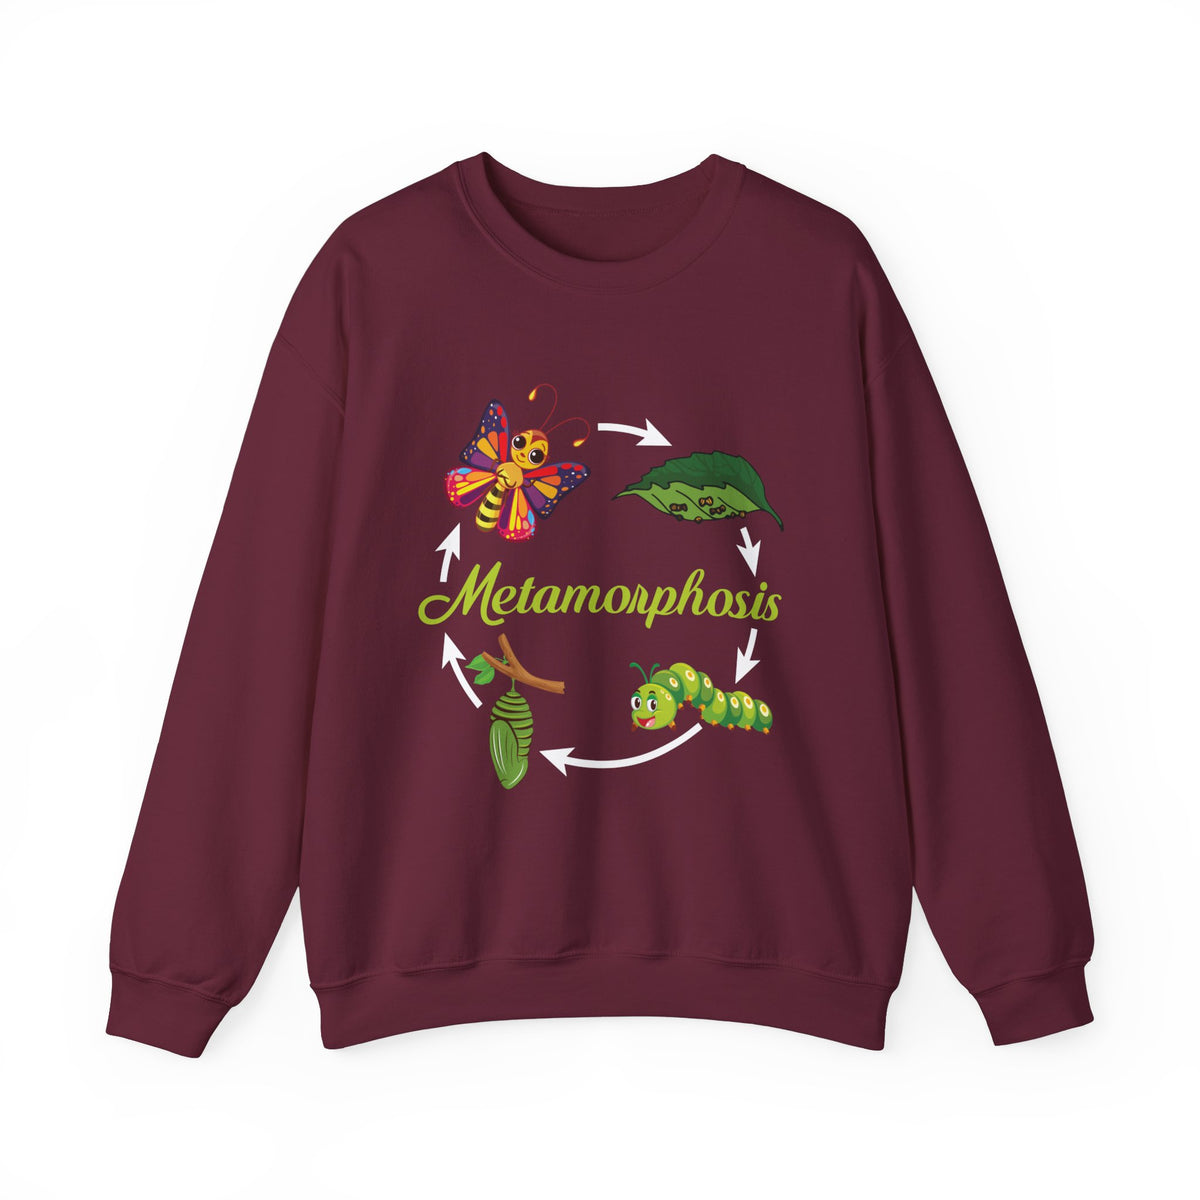 Metamorphosis Life Cycle Biology Shirts | Science Teacher Gifts   | Unisex Crewneck Sweatshirt